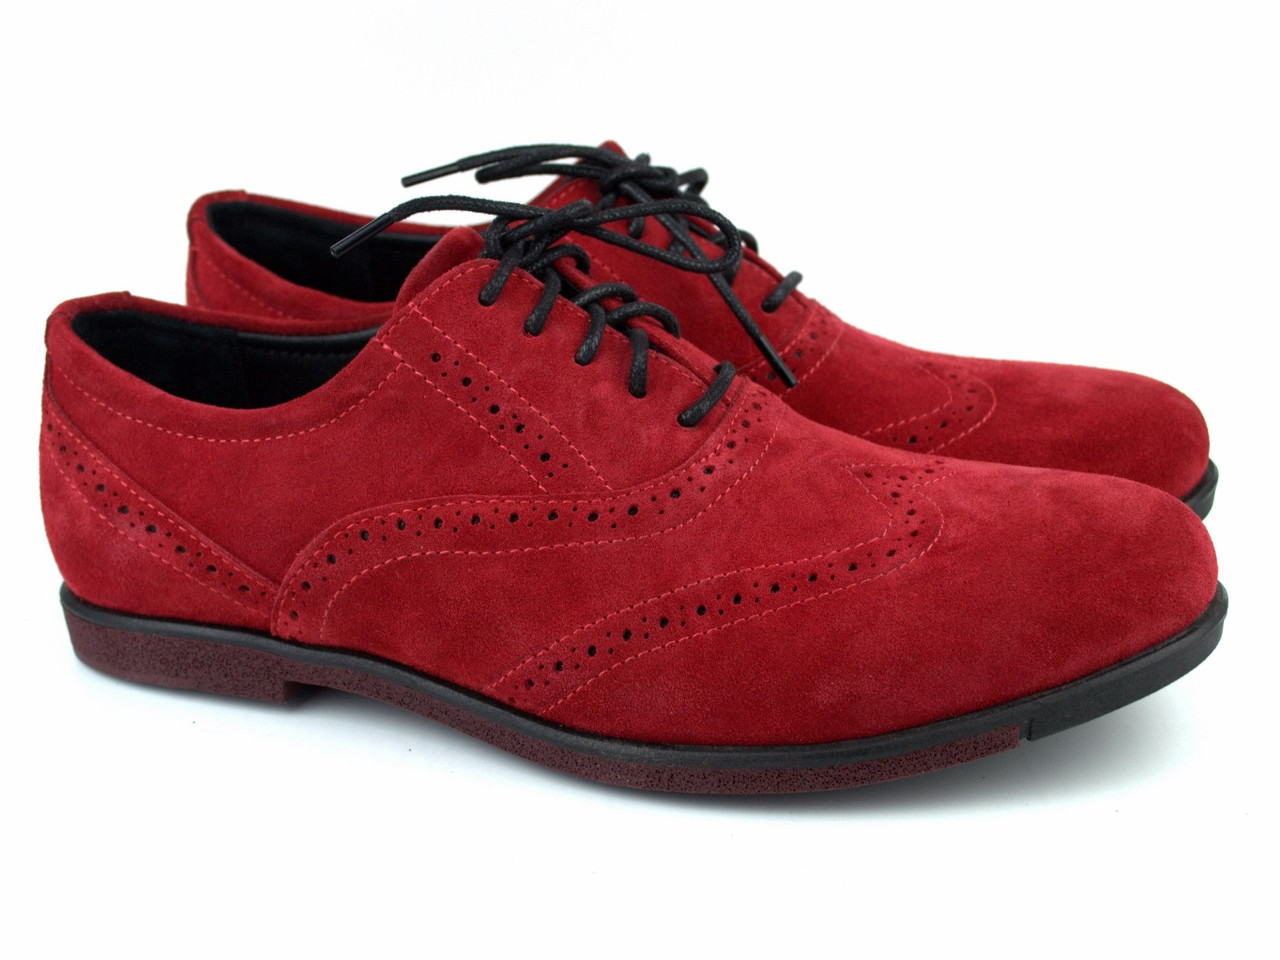 Красный туфли мужской. Мокасины Rosso-Avangard-BS-Alberto-Red-product. Оксфорд обувь мужская замшевые. Красная мужская обувь ,Red Flamingo. Мужские туфли Avangard.